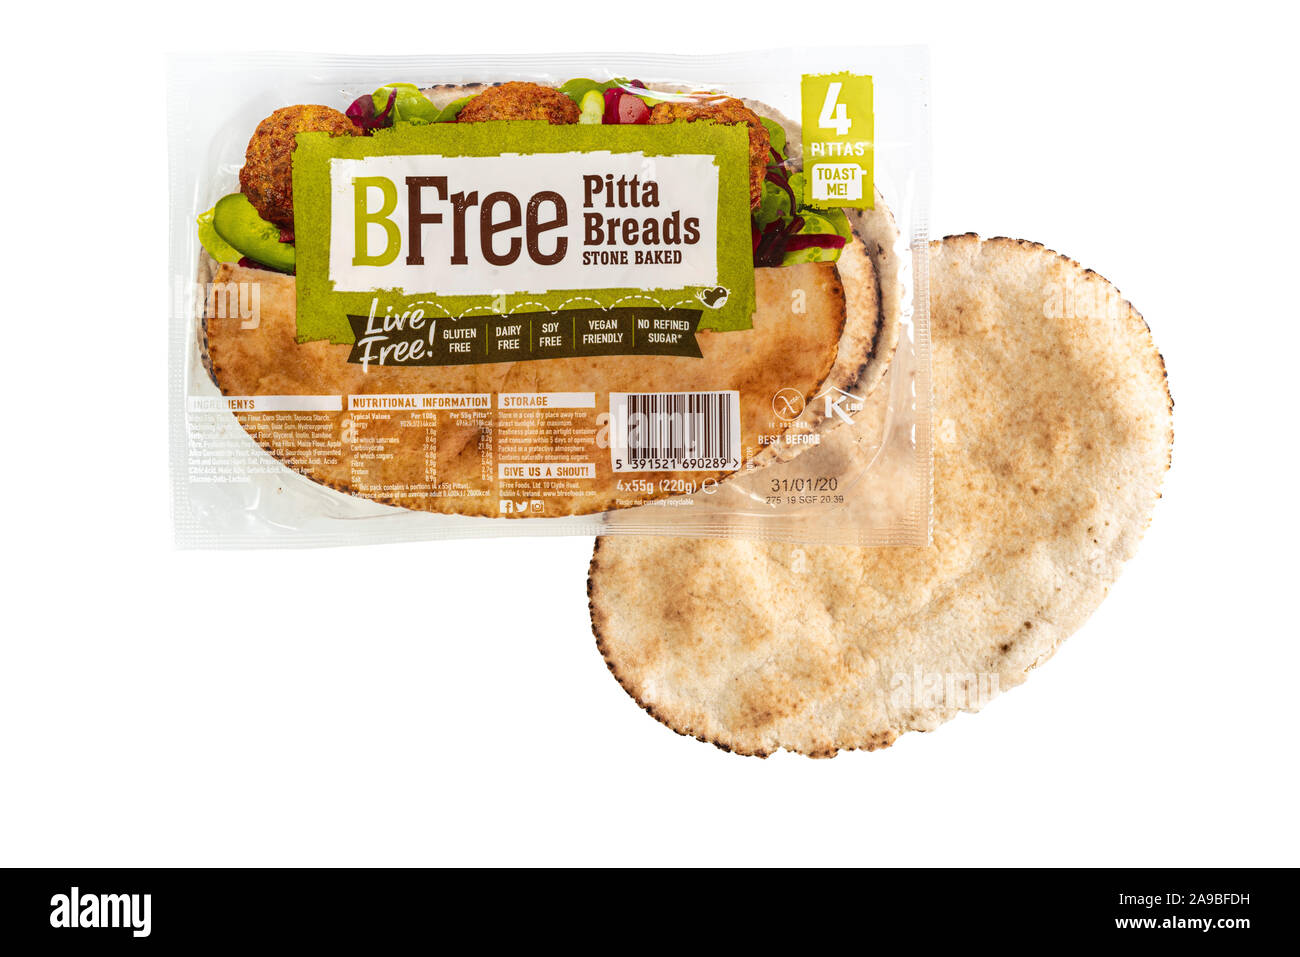 B free gluten free pitta bread, overhead view. Stock Photo